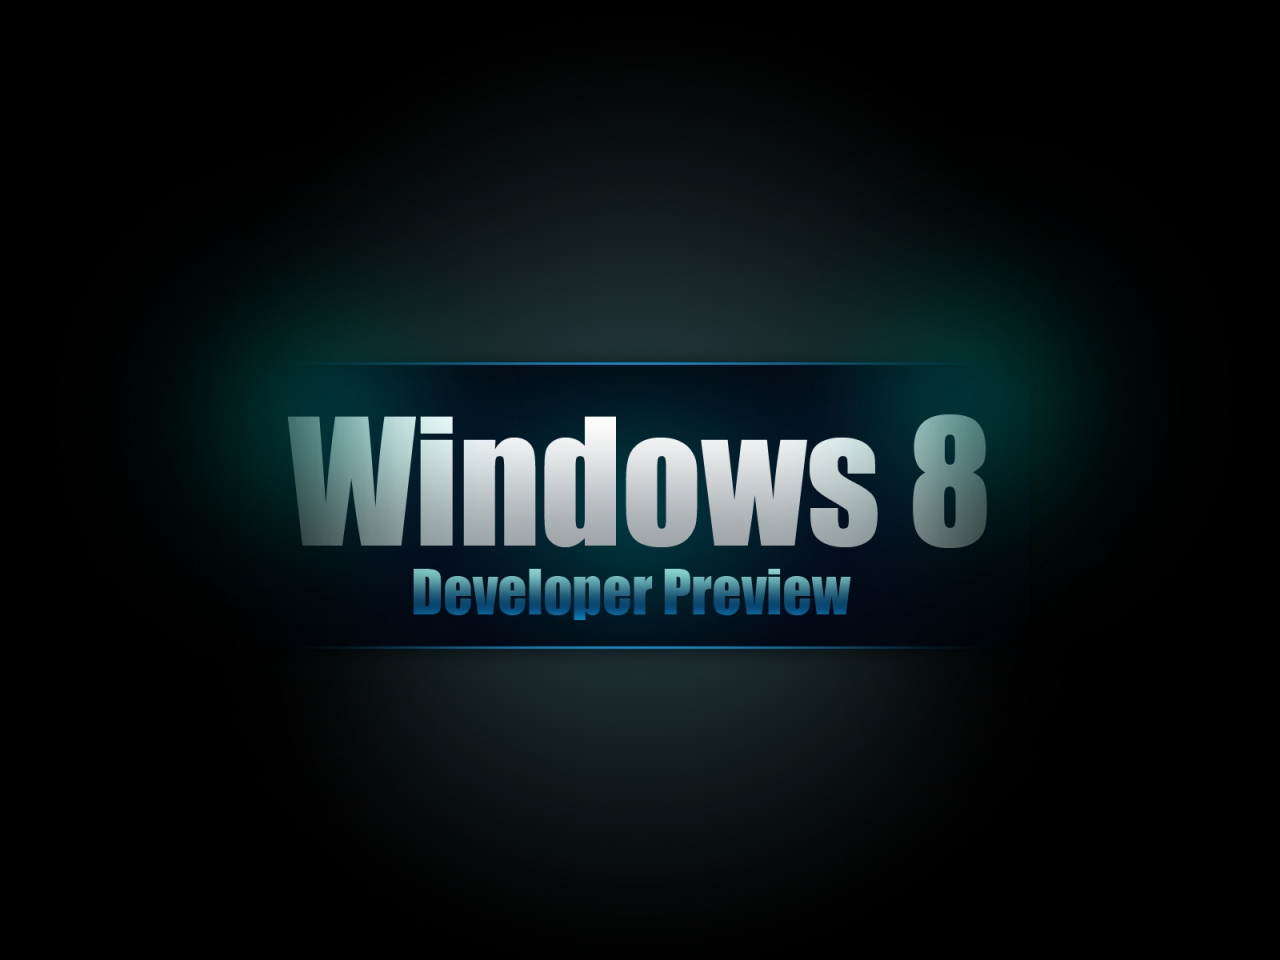 Windows 8 Developer for 1280 x 960 resolution